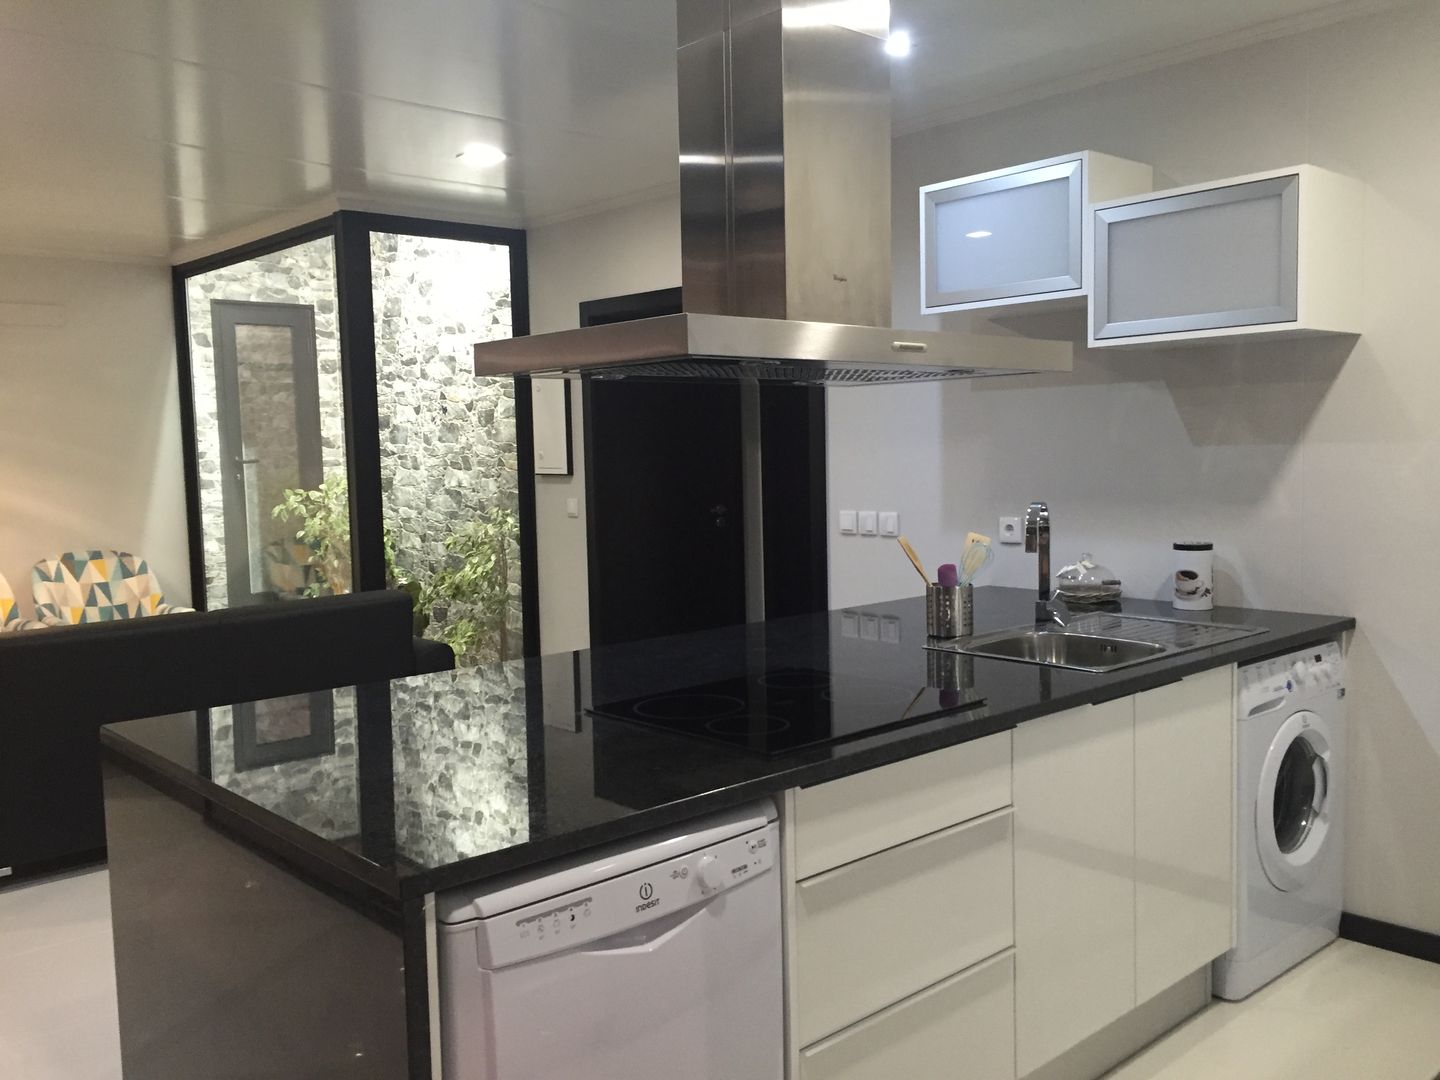 Casa modular com 2 quartos e jardim interior, KITUR KITUR ミニマルデザインの キッチン